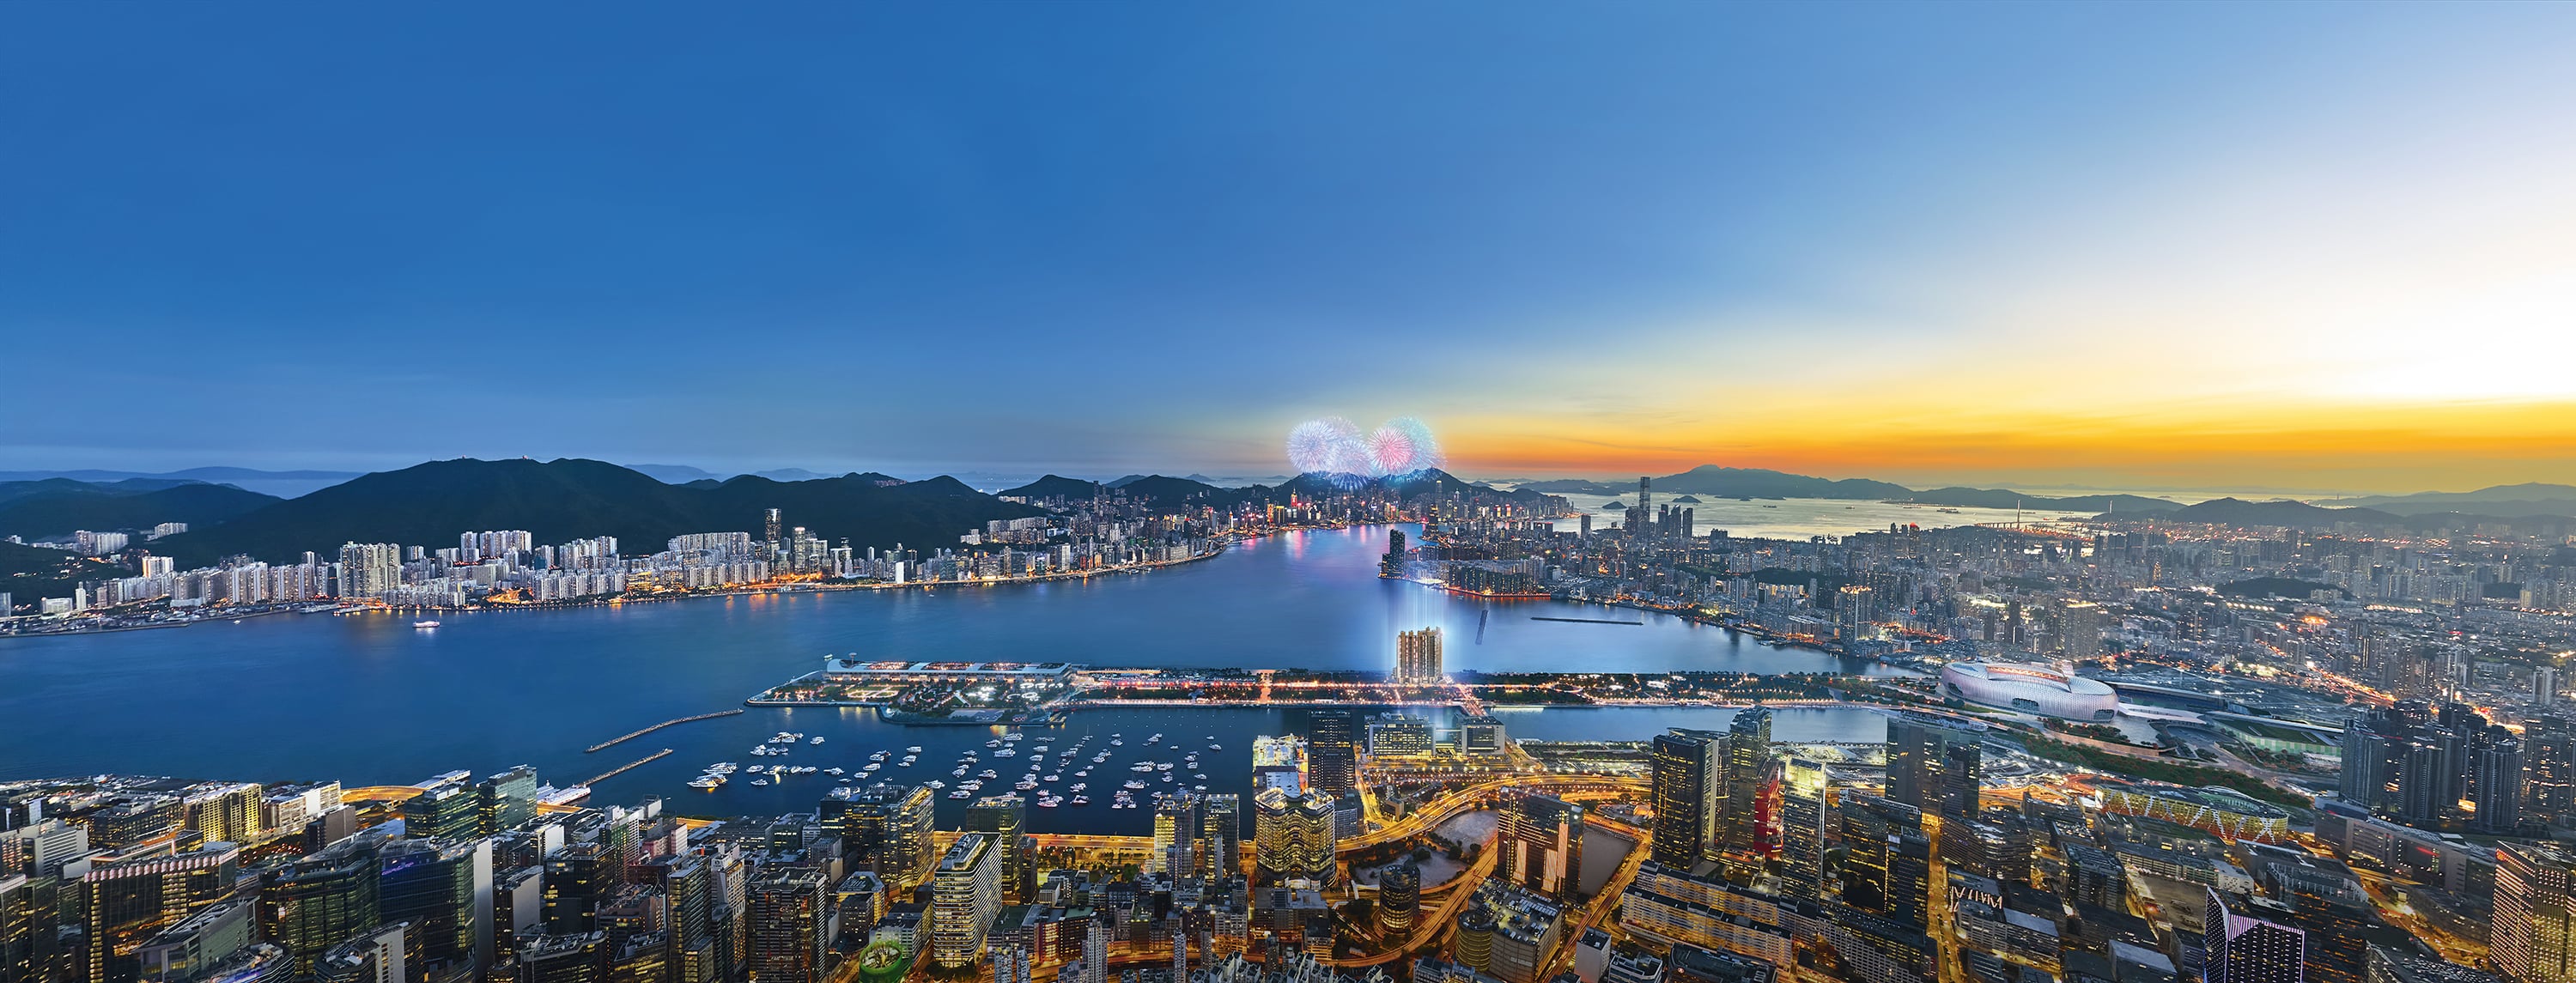 THE NEW CBD OF HONG KONG – KOWLOON  EAST2